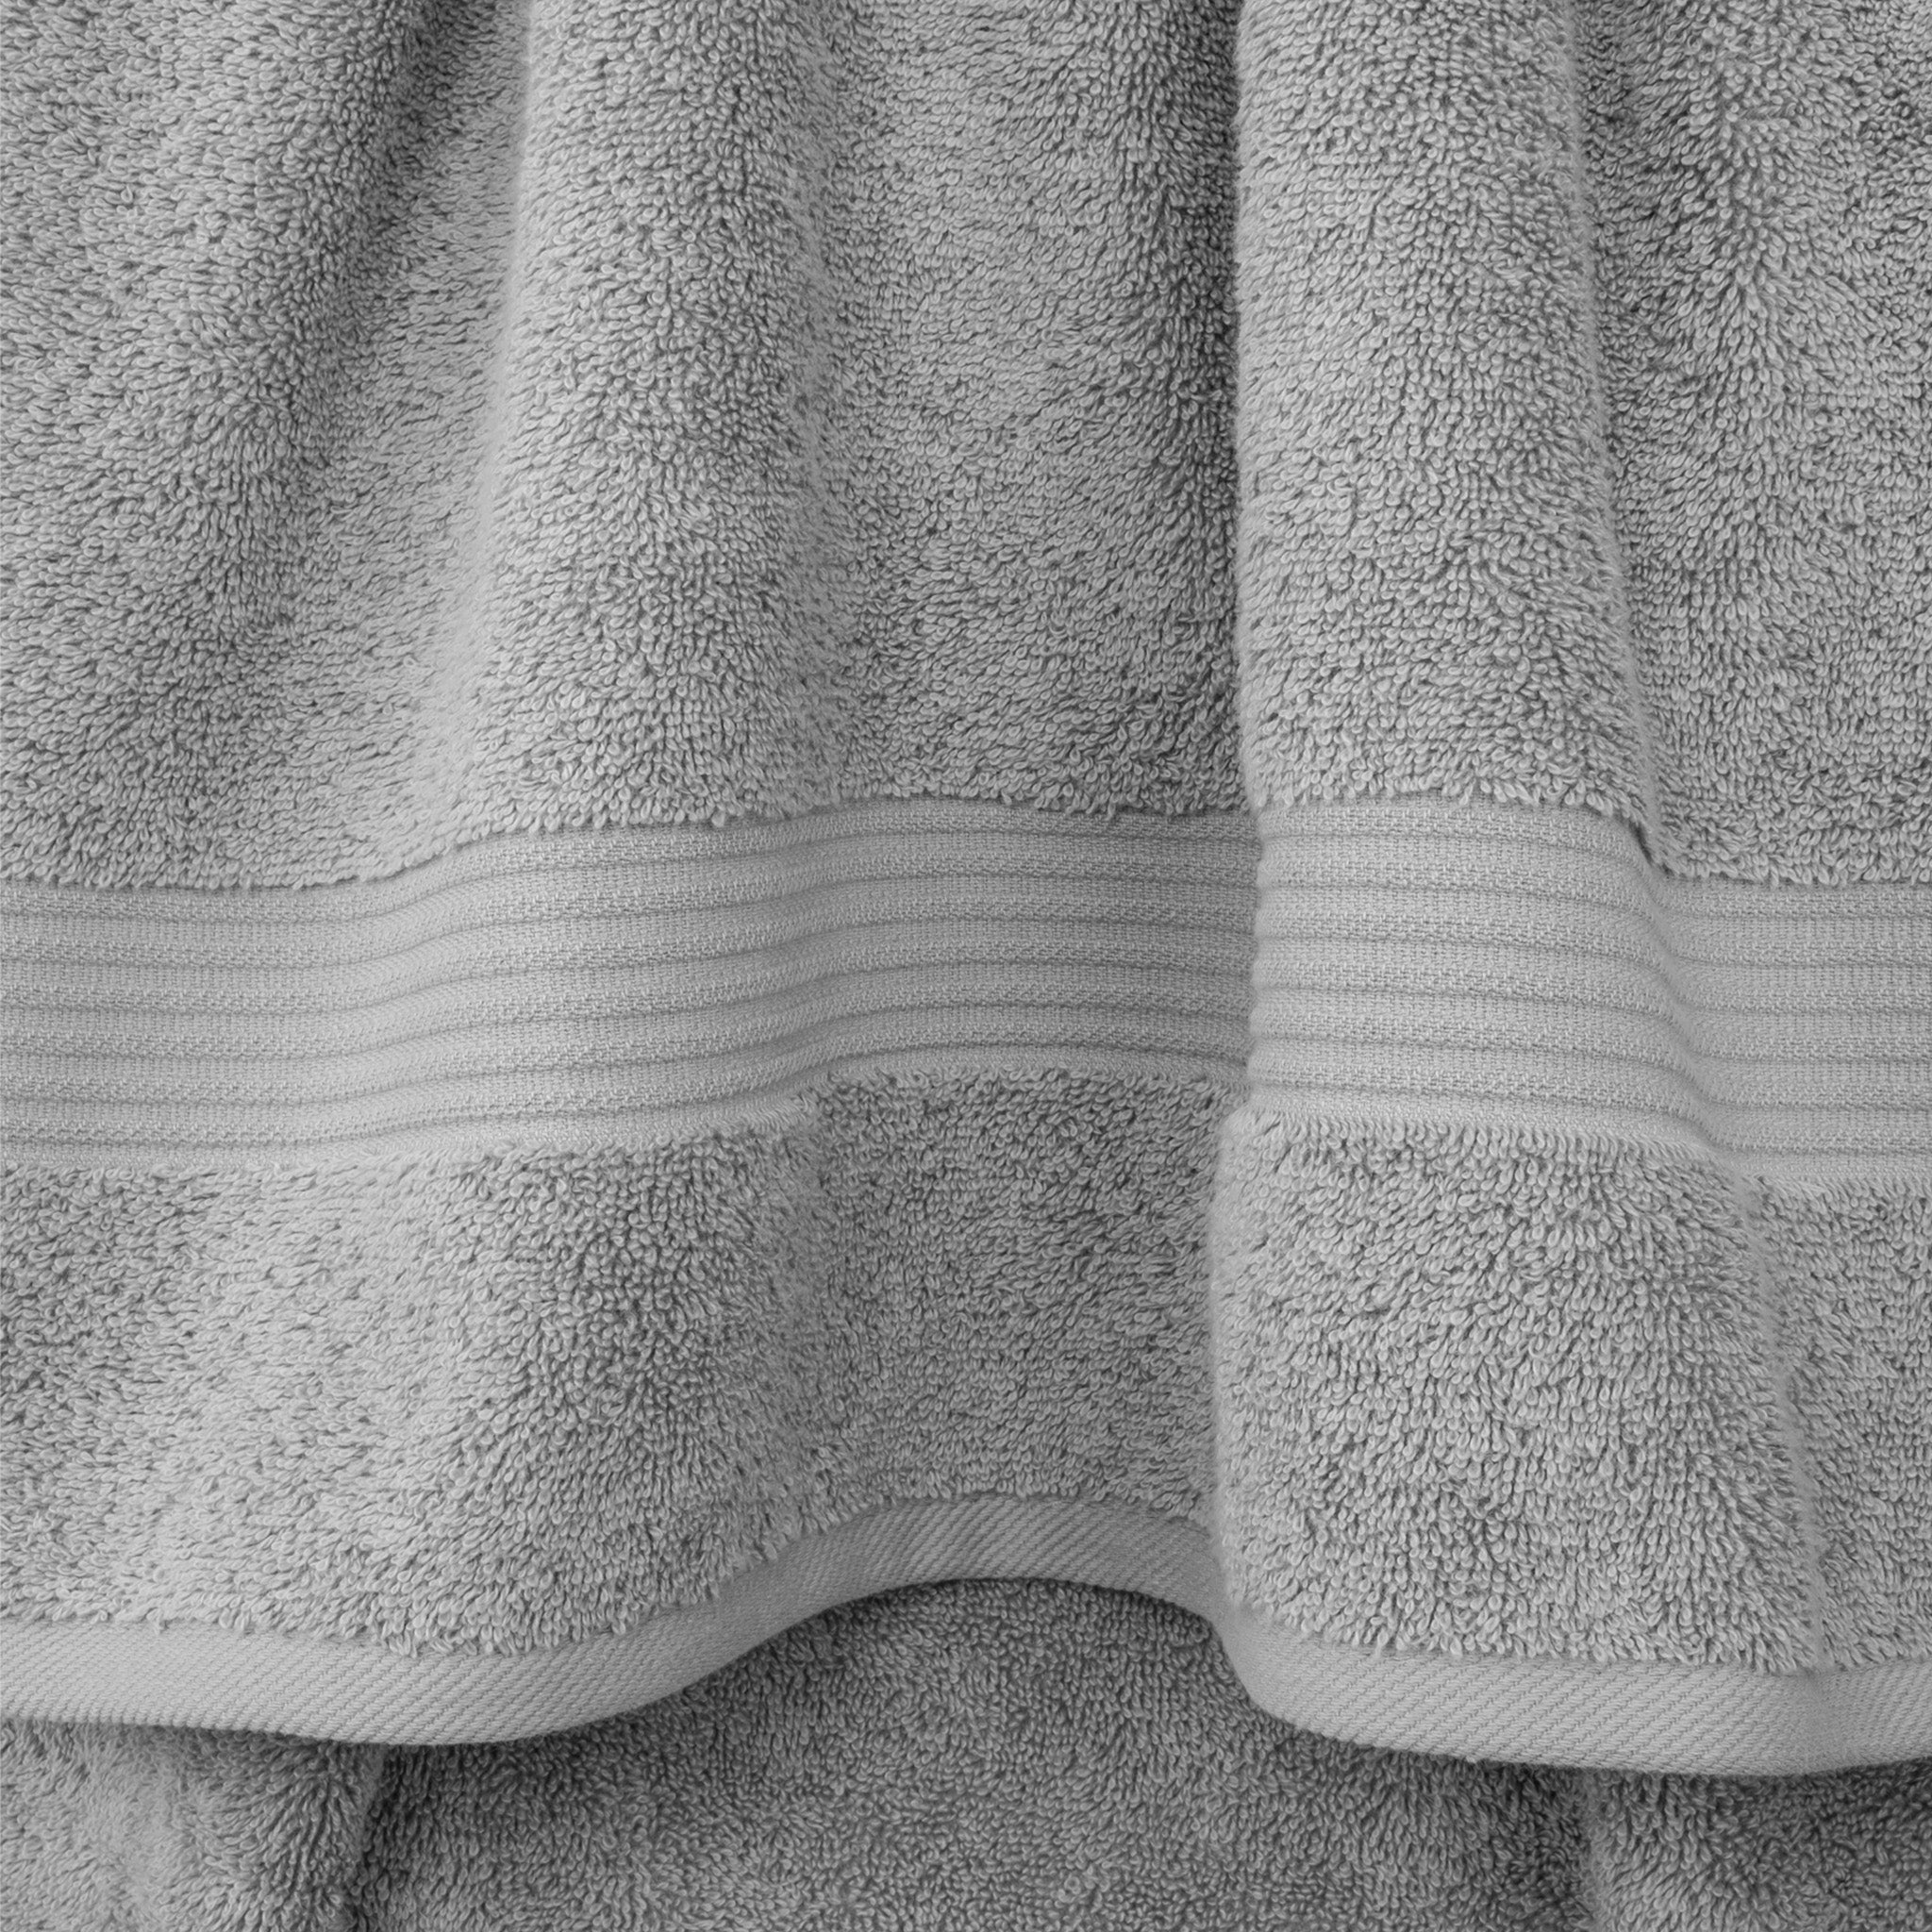 American Soft Linen Bekos 100% Cotton Turkish Towels, 4 Piece Washcloth Towel Set -rockridge-gray-04